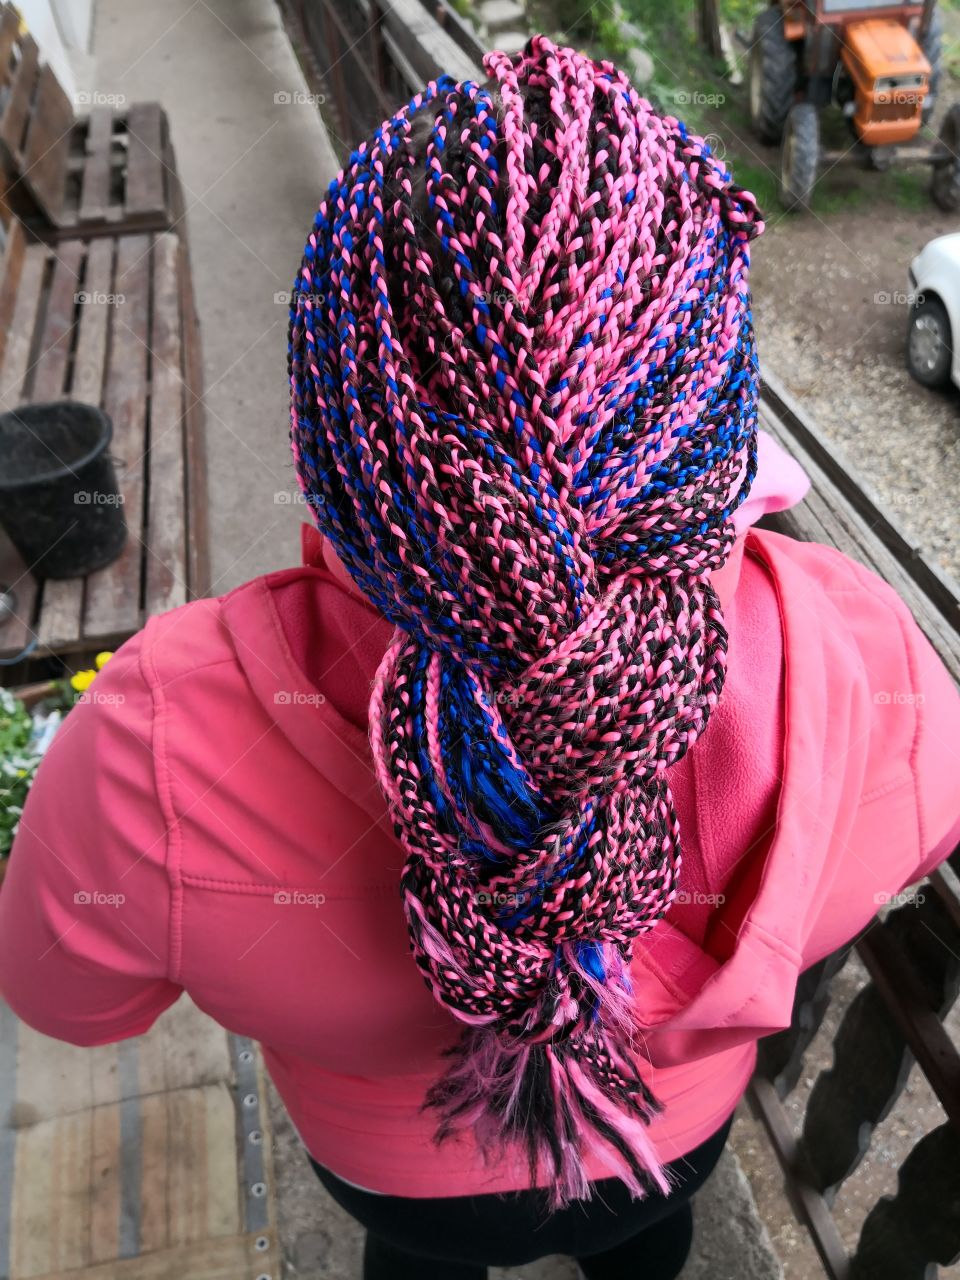 #colorful #braids #braid #blue #pink #hairs